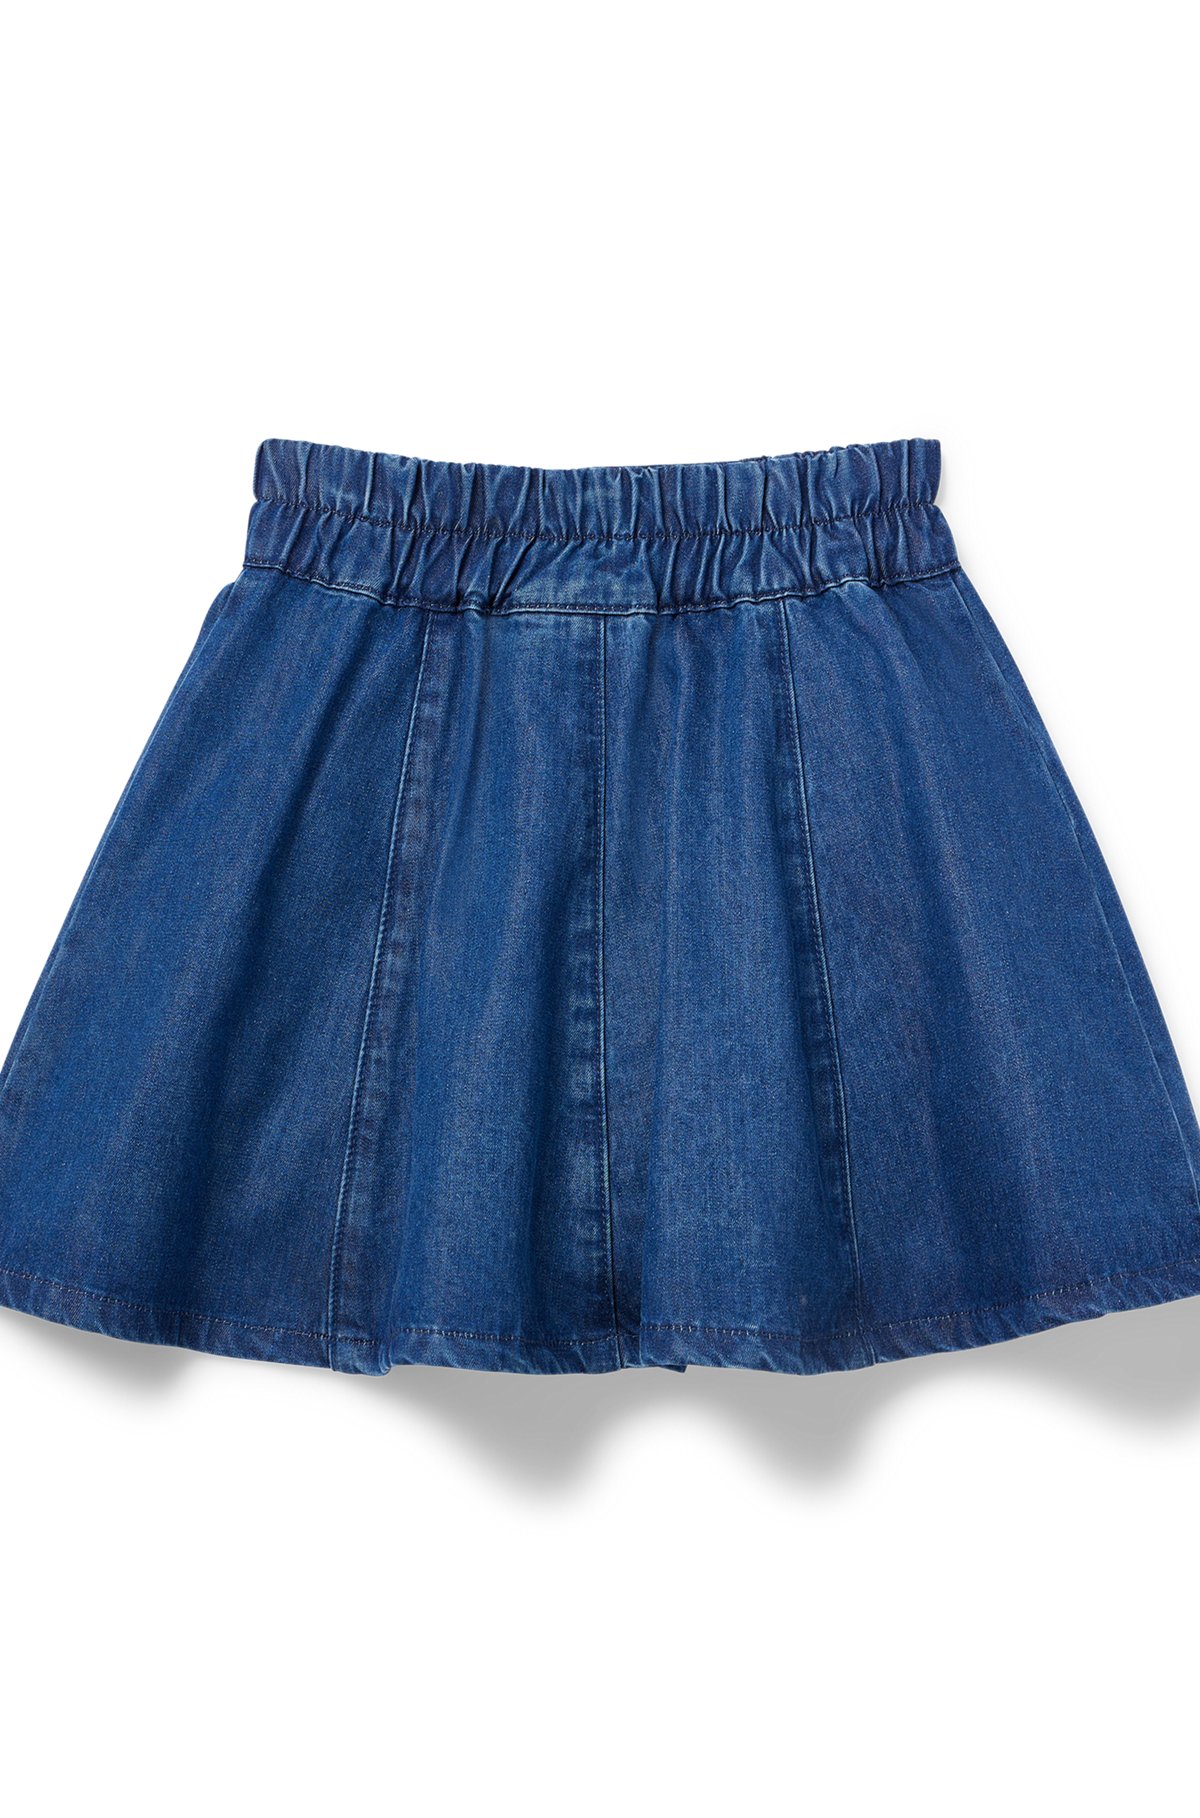 Kids' denim skirt with embroidered logo, Blue